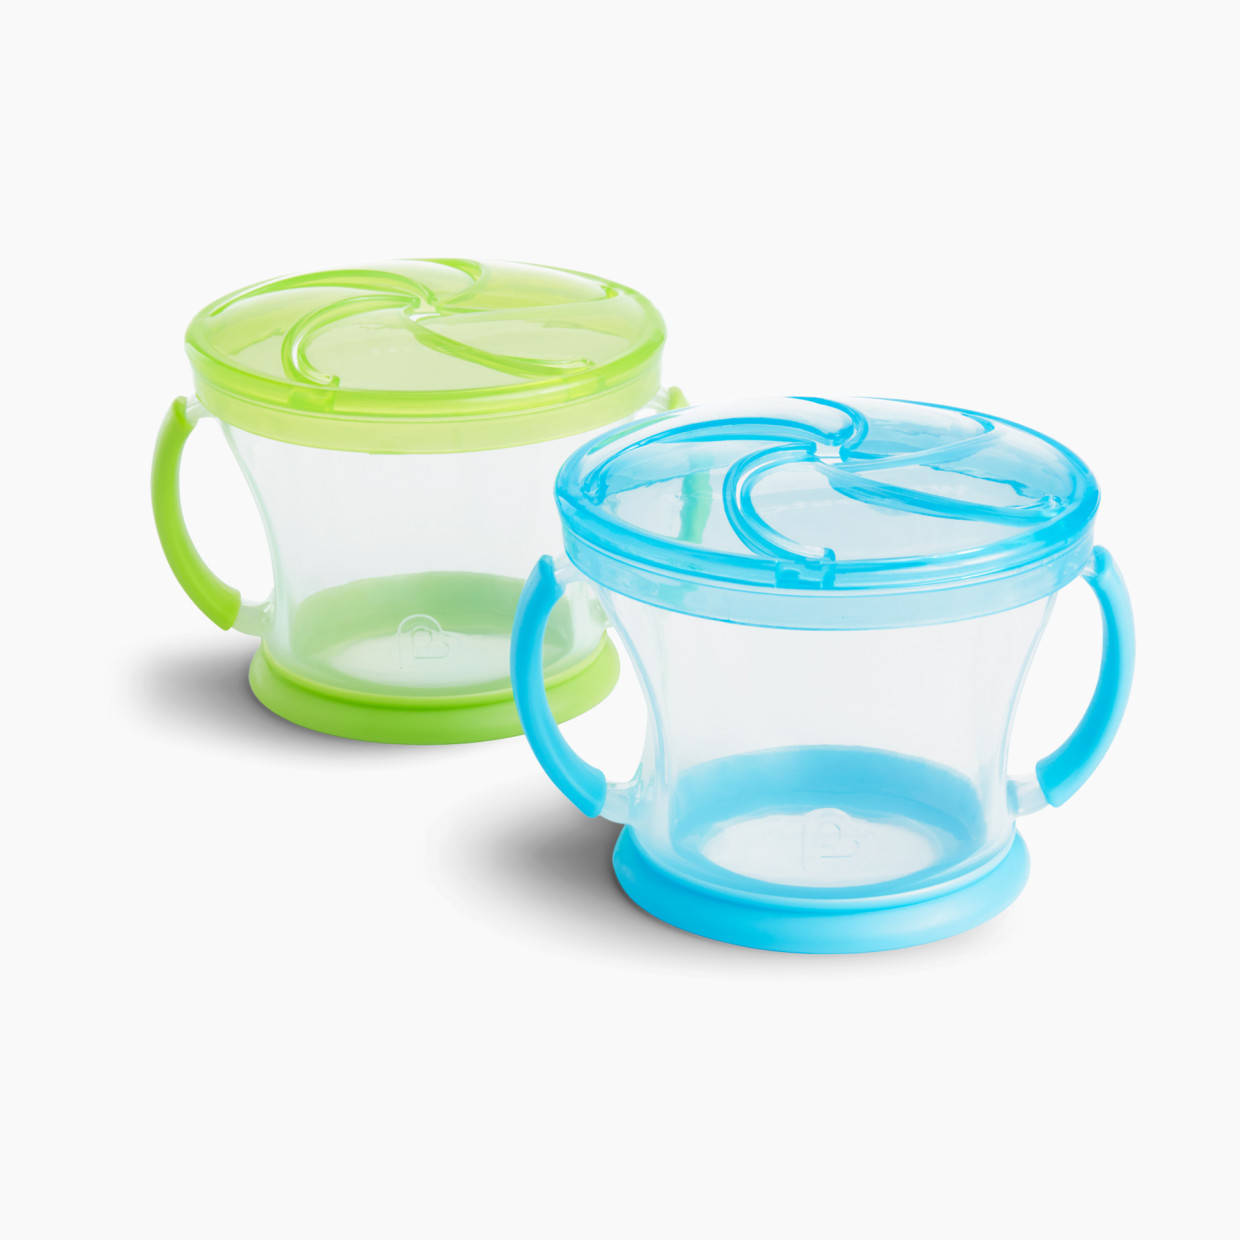 Munchkin Snack Catcher BPA-free 12+ Months Baby Dispenser package